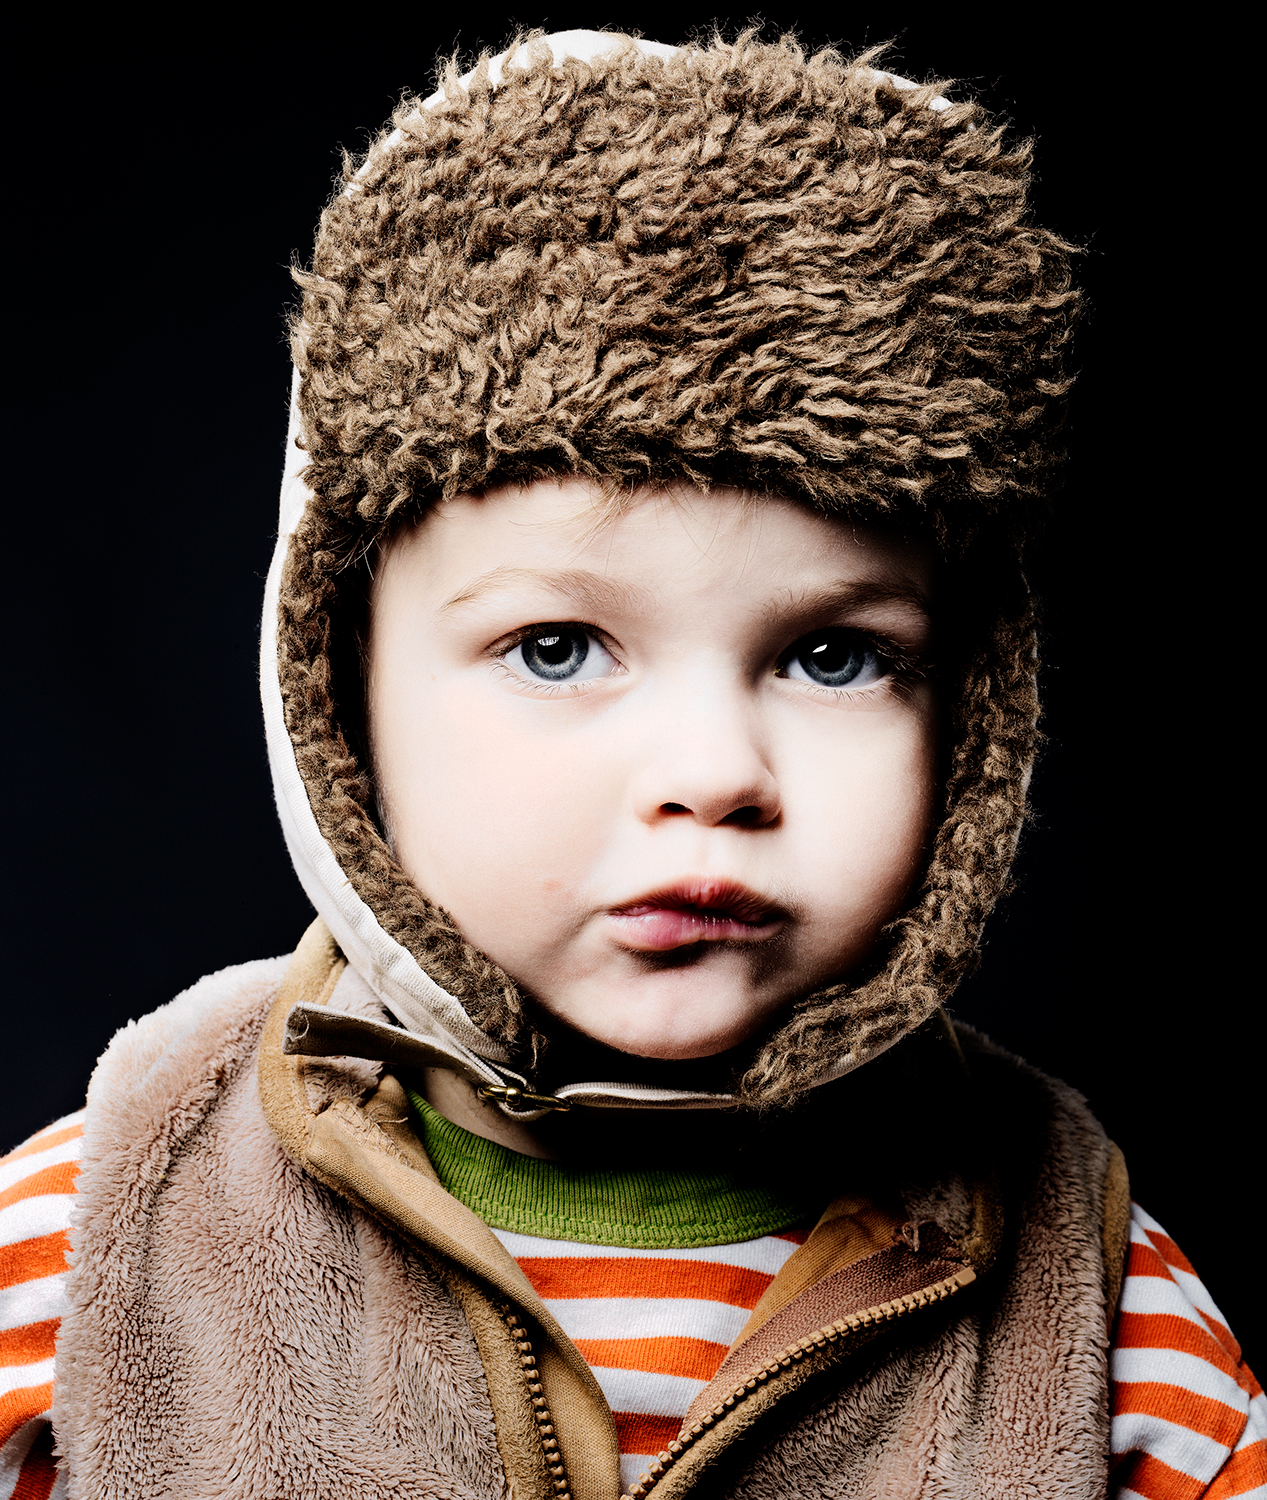 Folio_baby-with-hat2